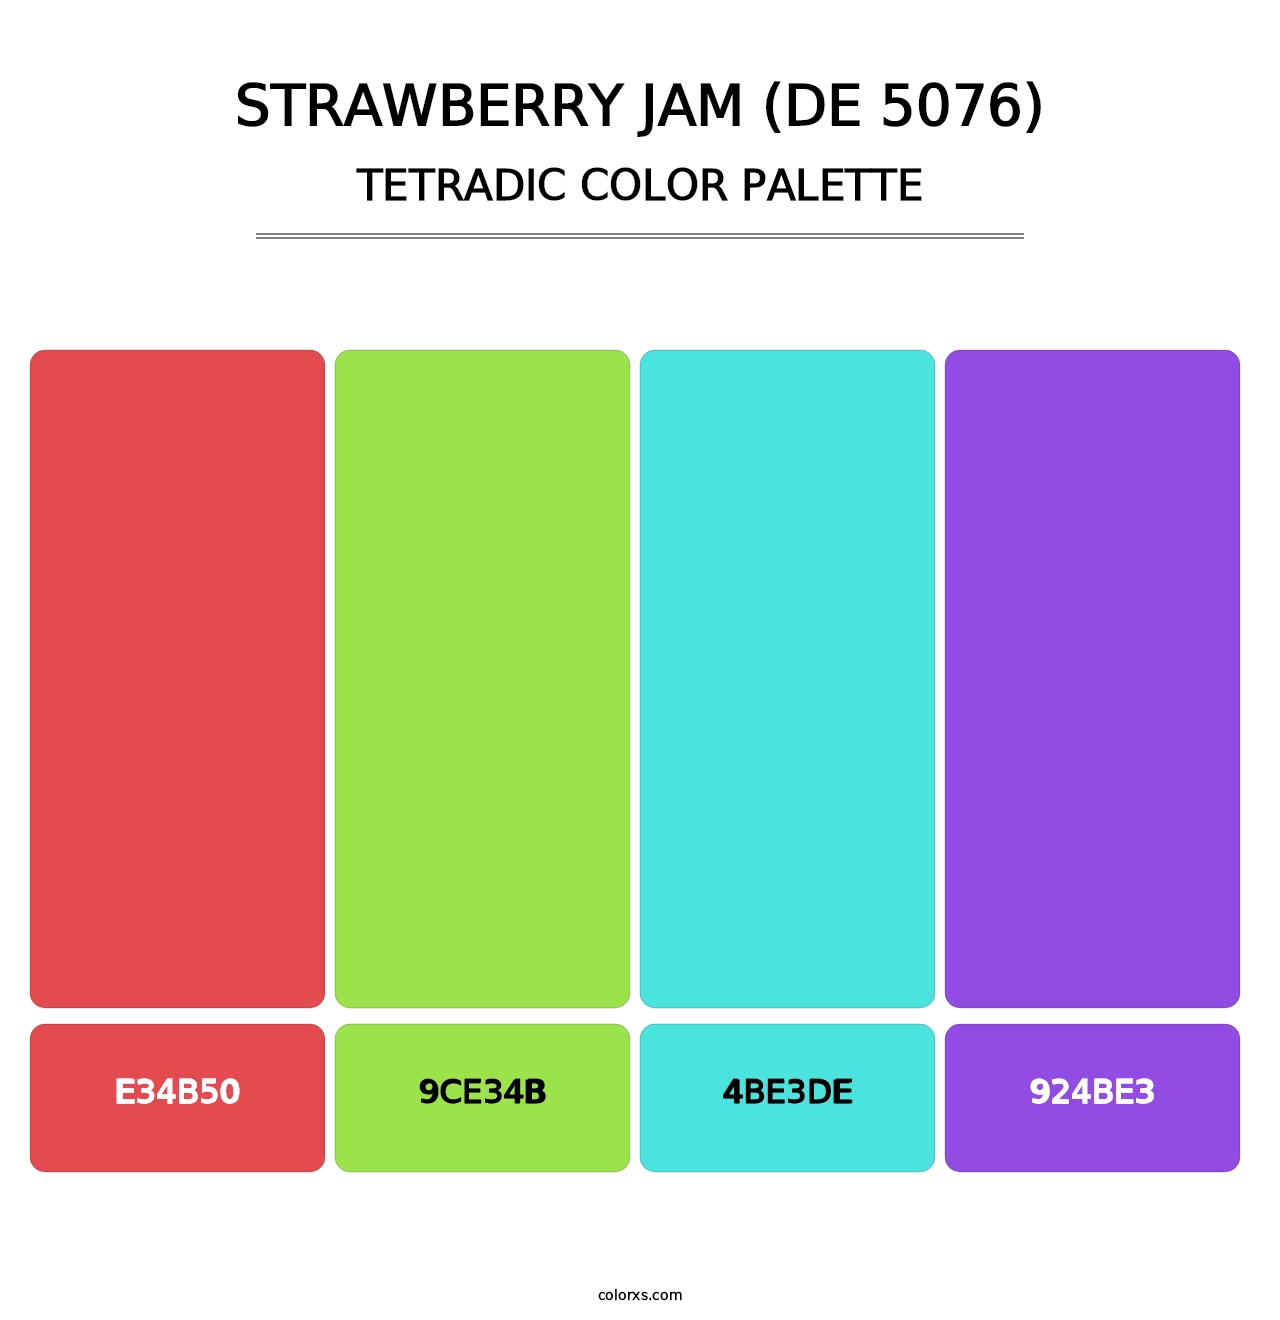 Strawberry Jam (DE 5076) - Tetradic Color Palette